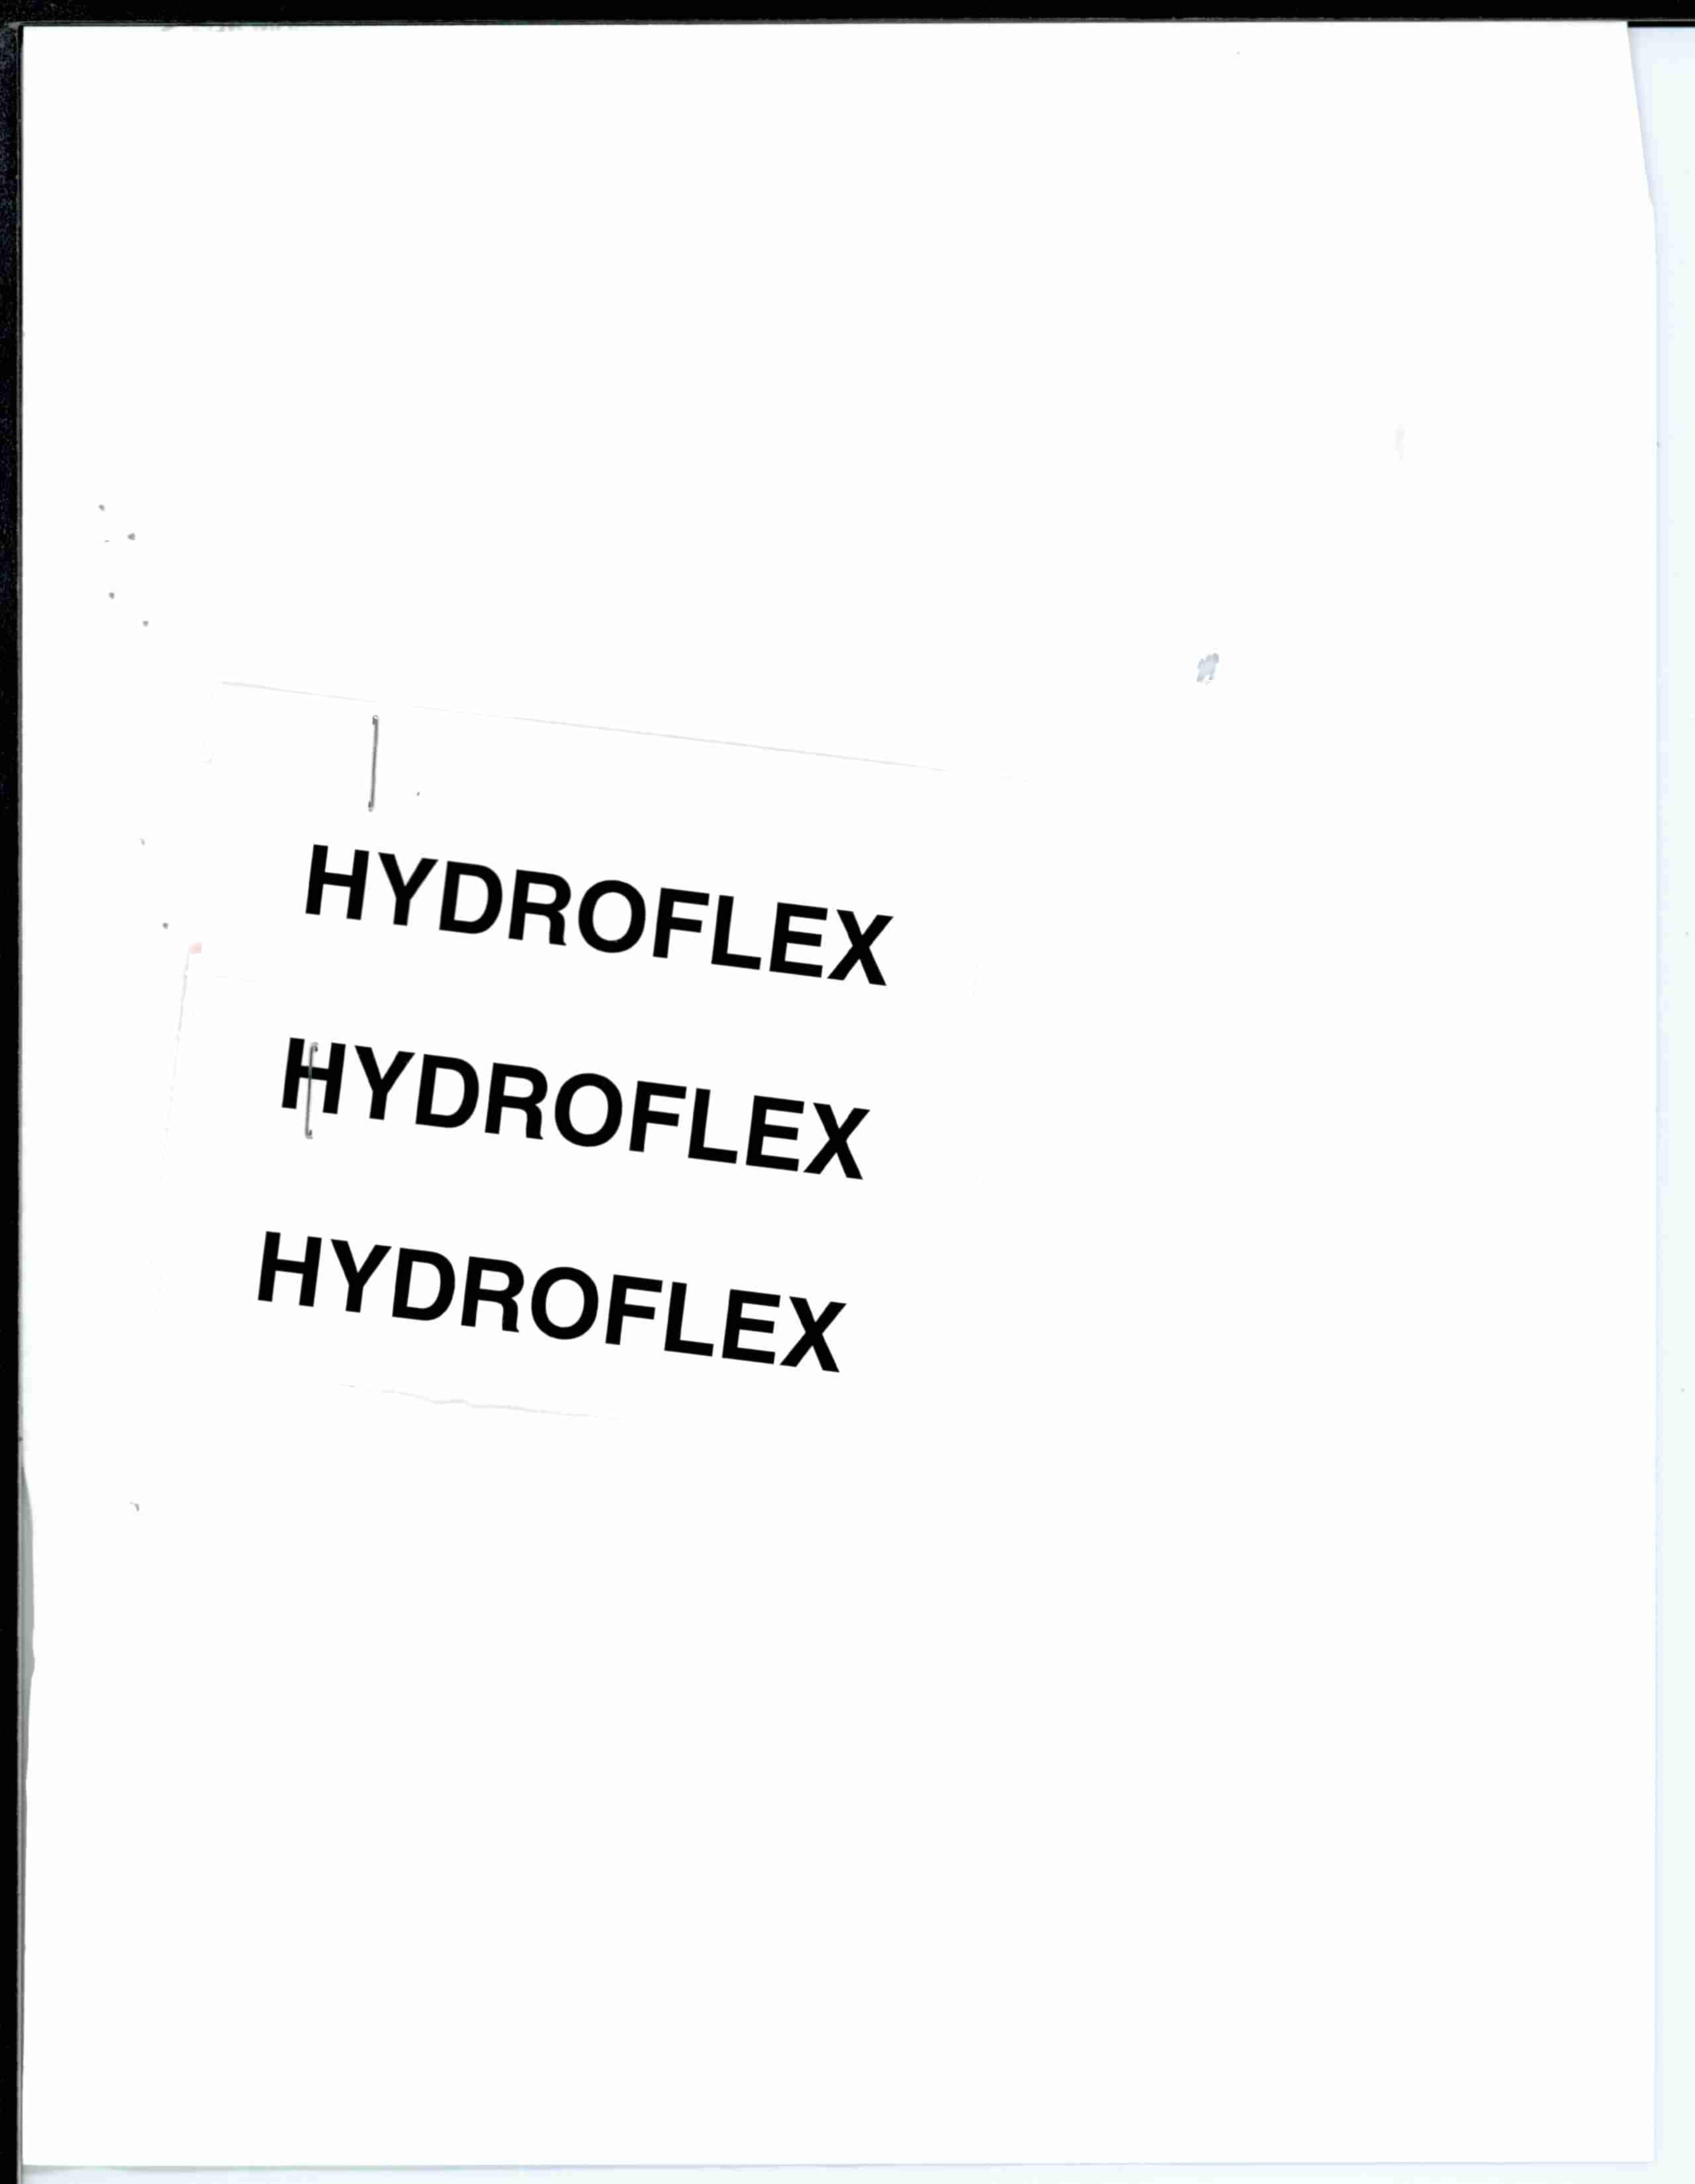 HYDROFLEX